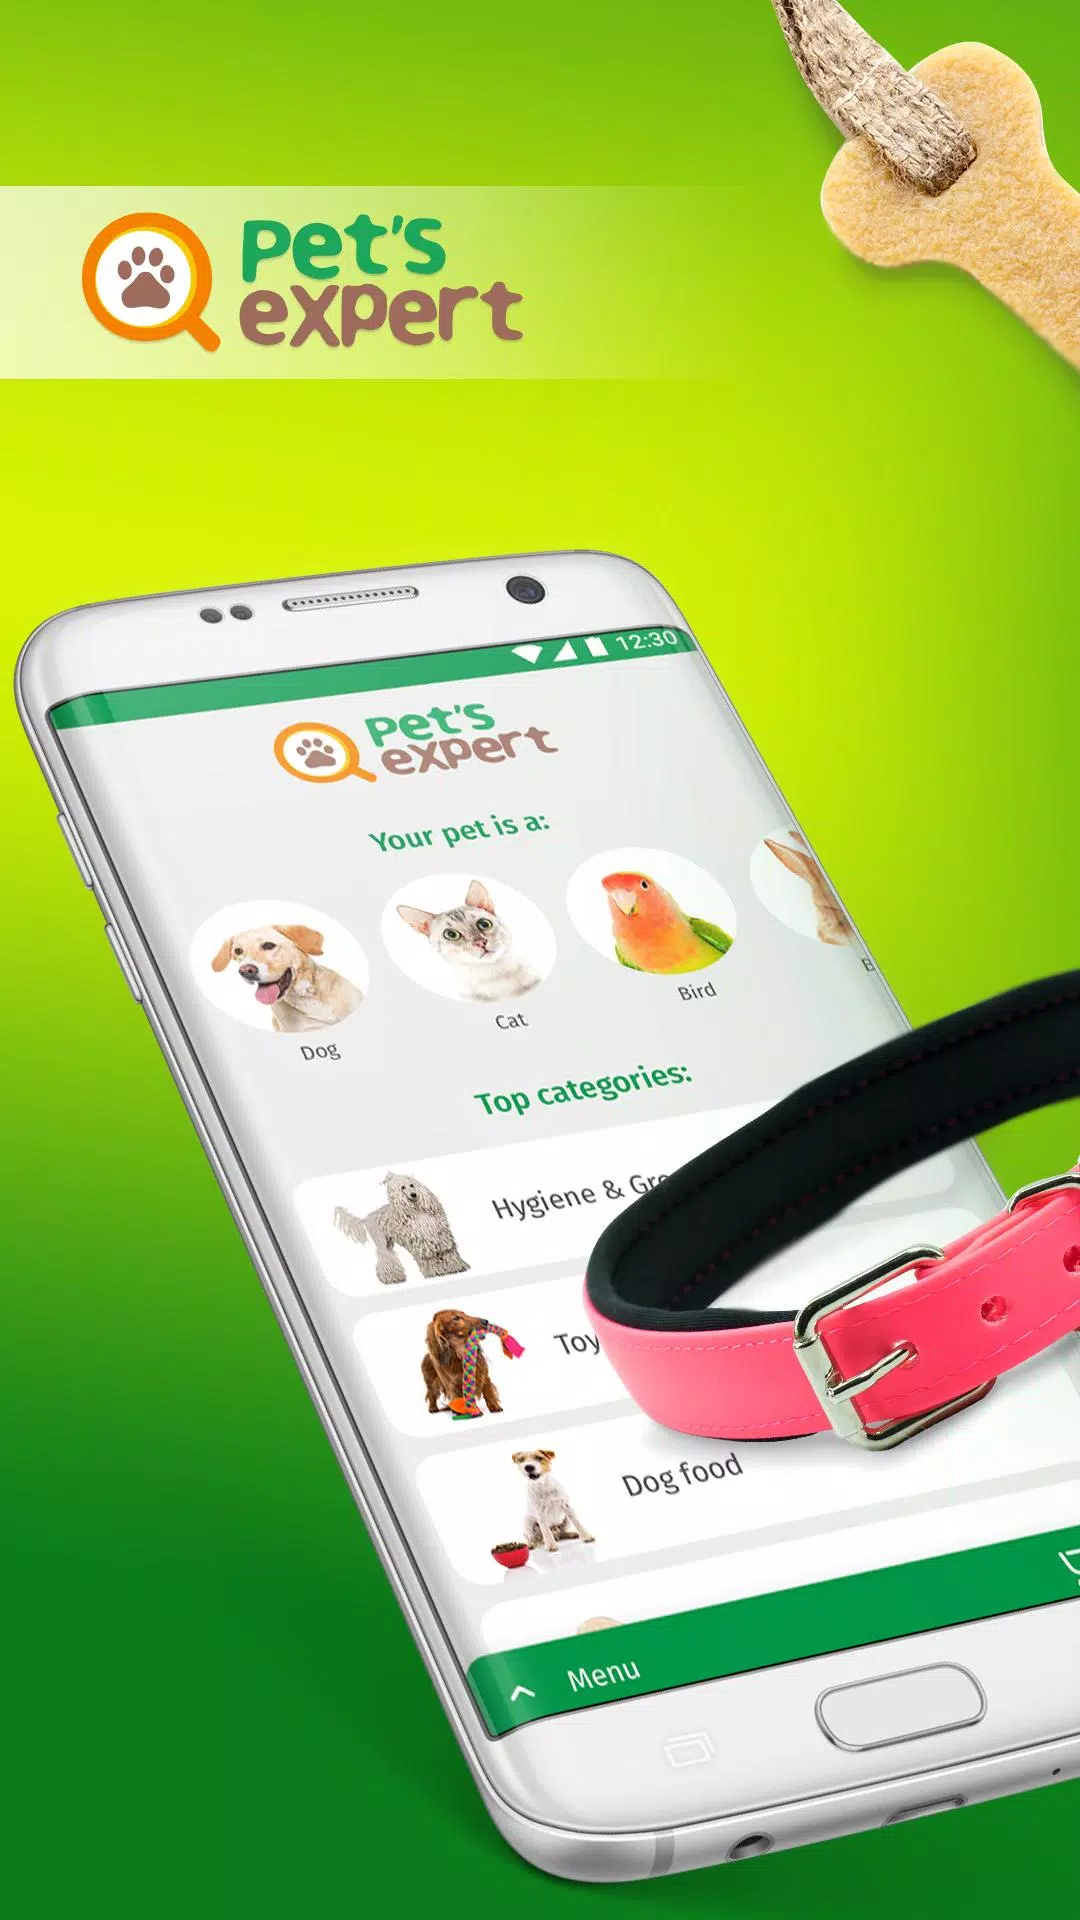 Online Pet shop PetsExpert - f APK for Android Download